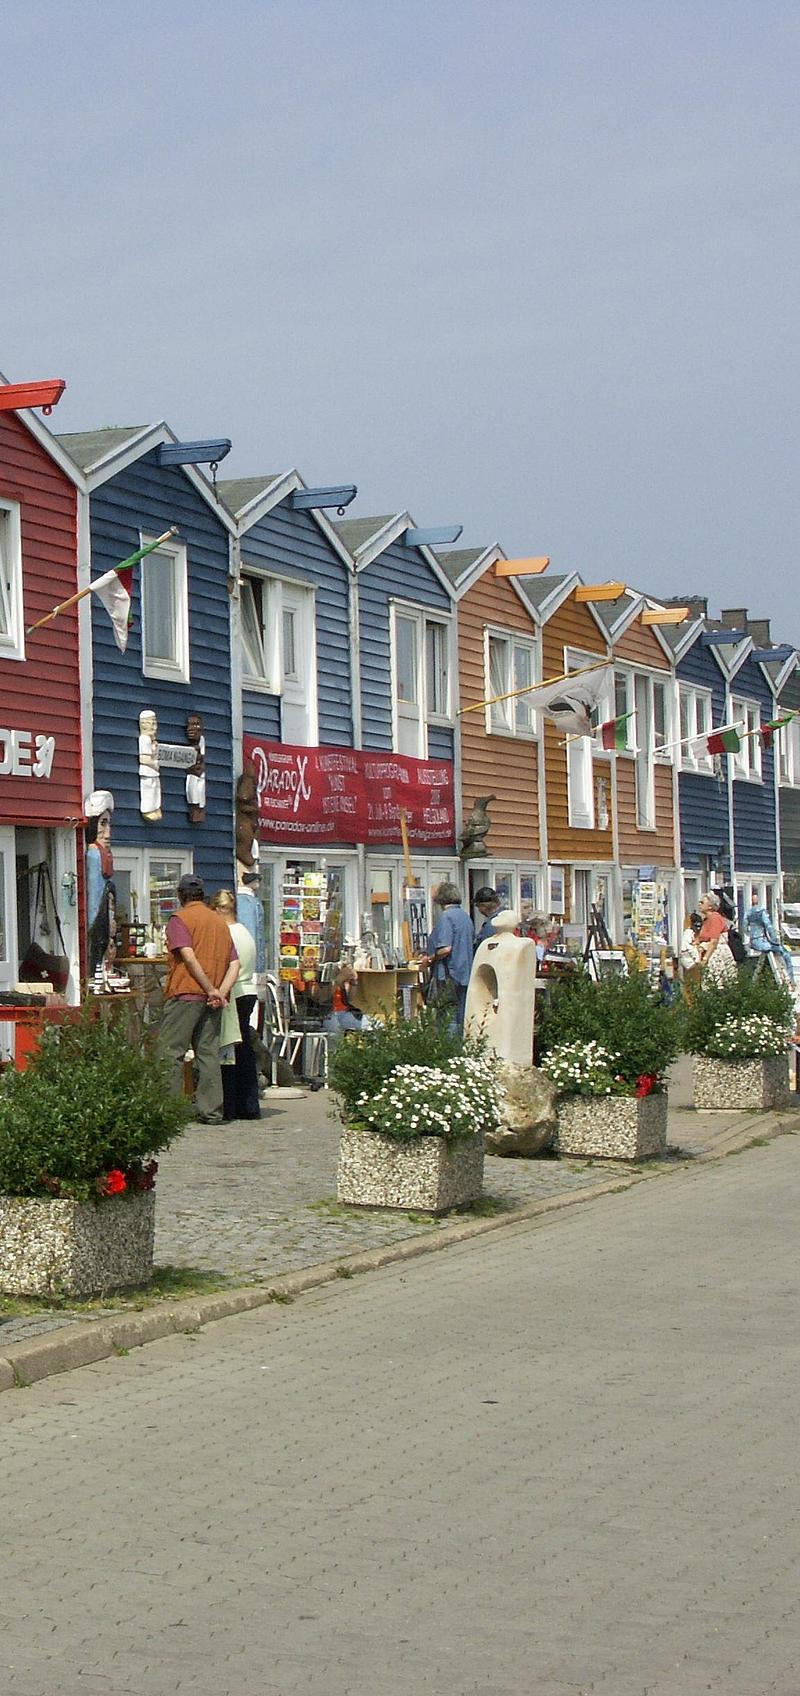 colourful shops on Heligoland called "Hummerbuden"